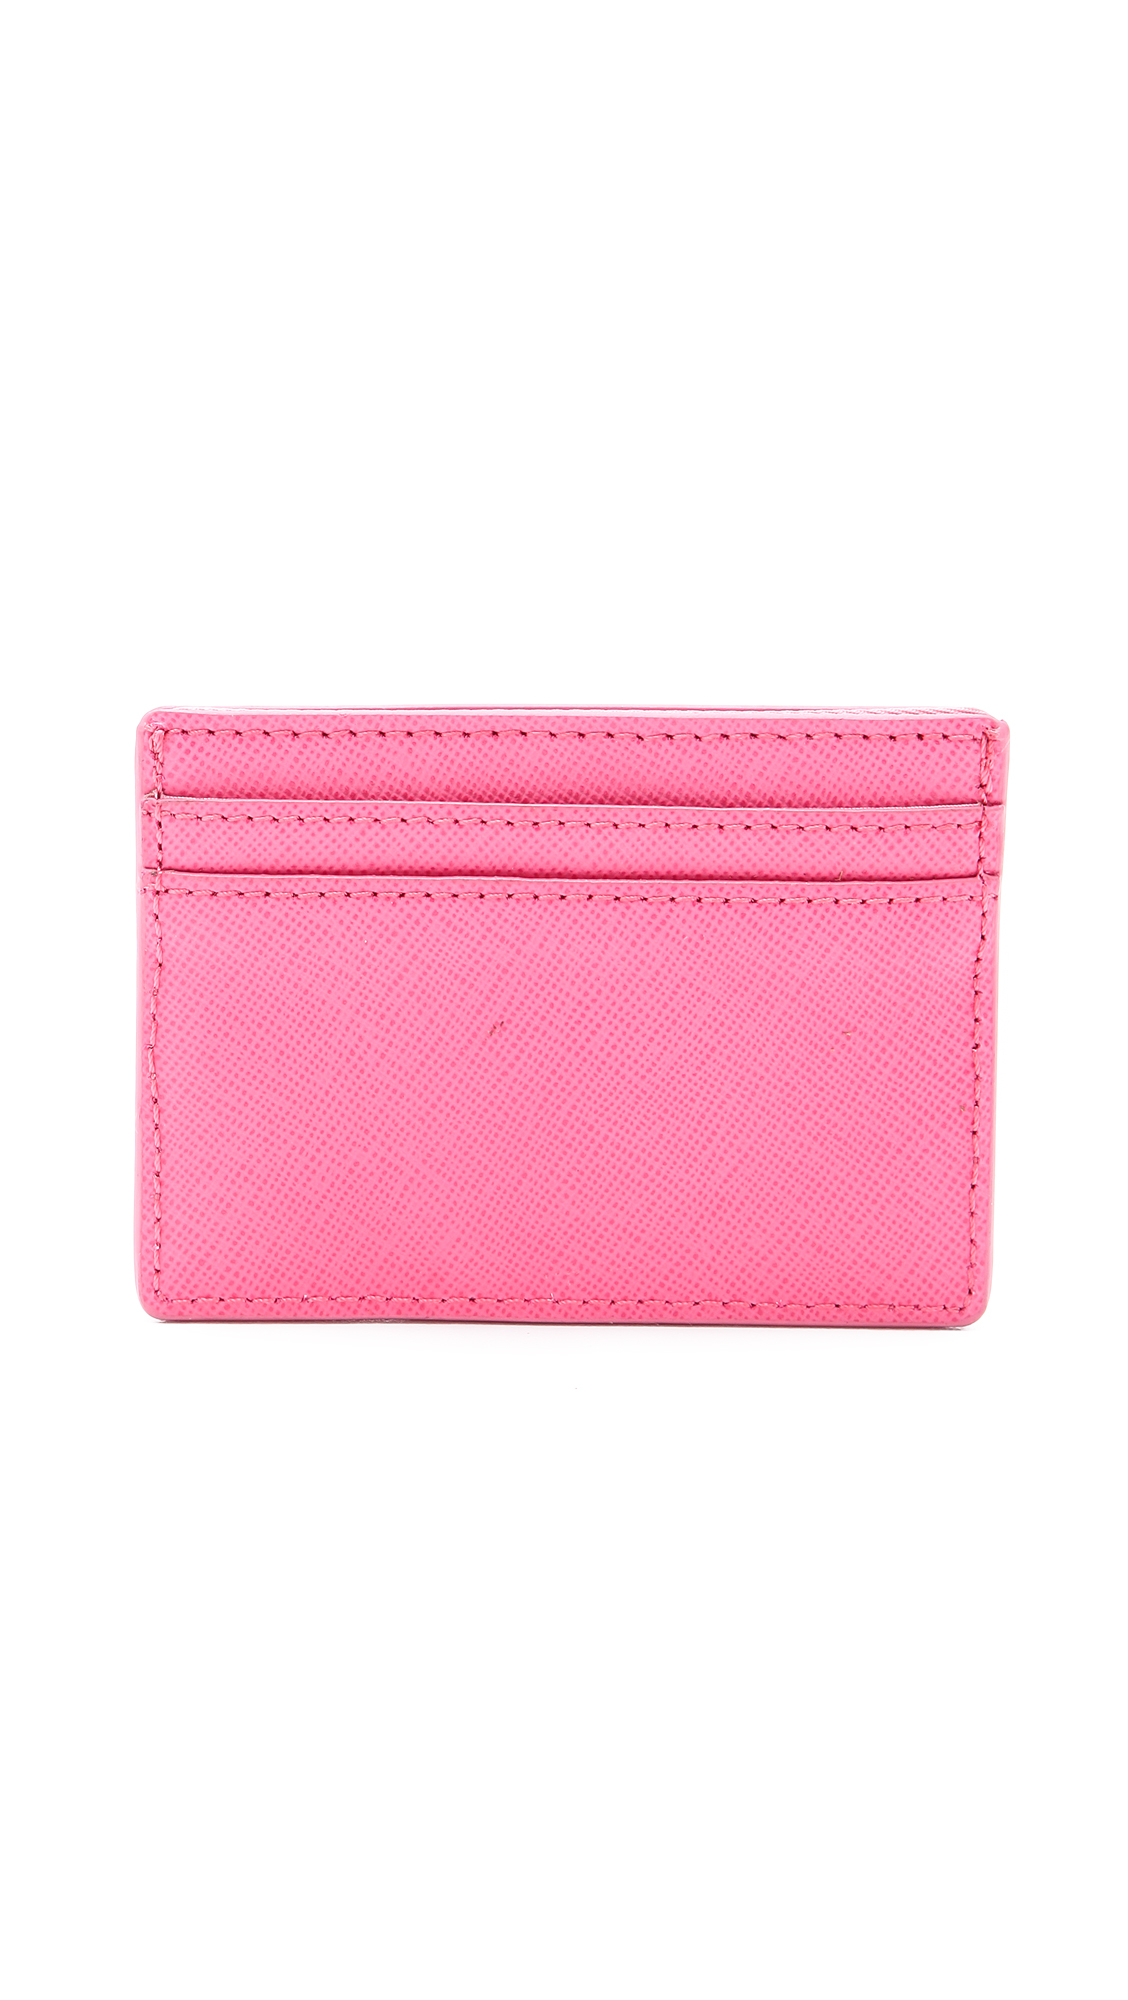 Lyst - Tory Burch Saffiano Slim Card Case in Pink